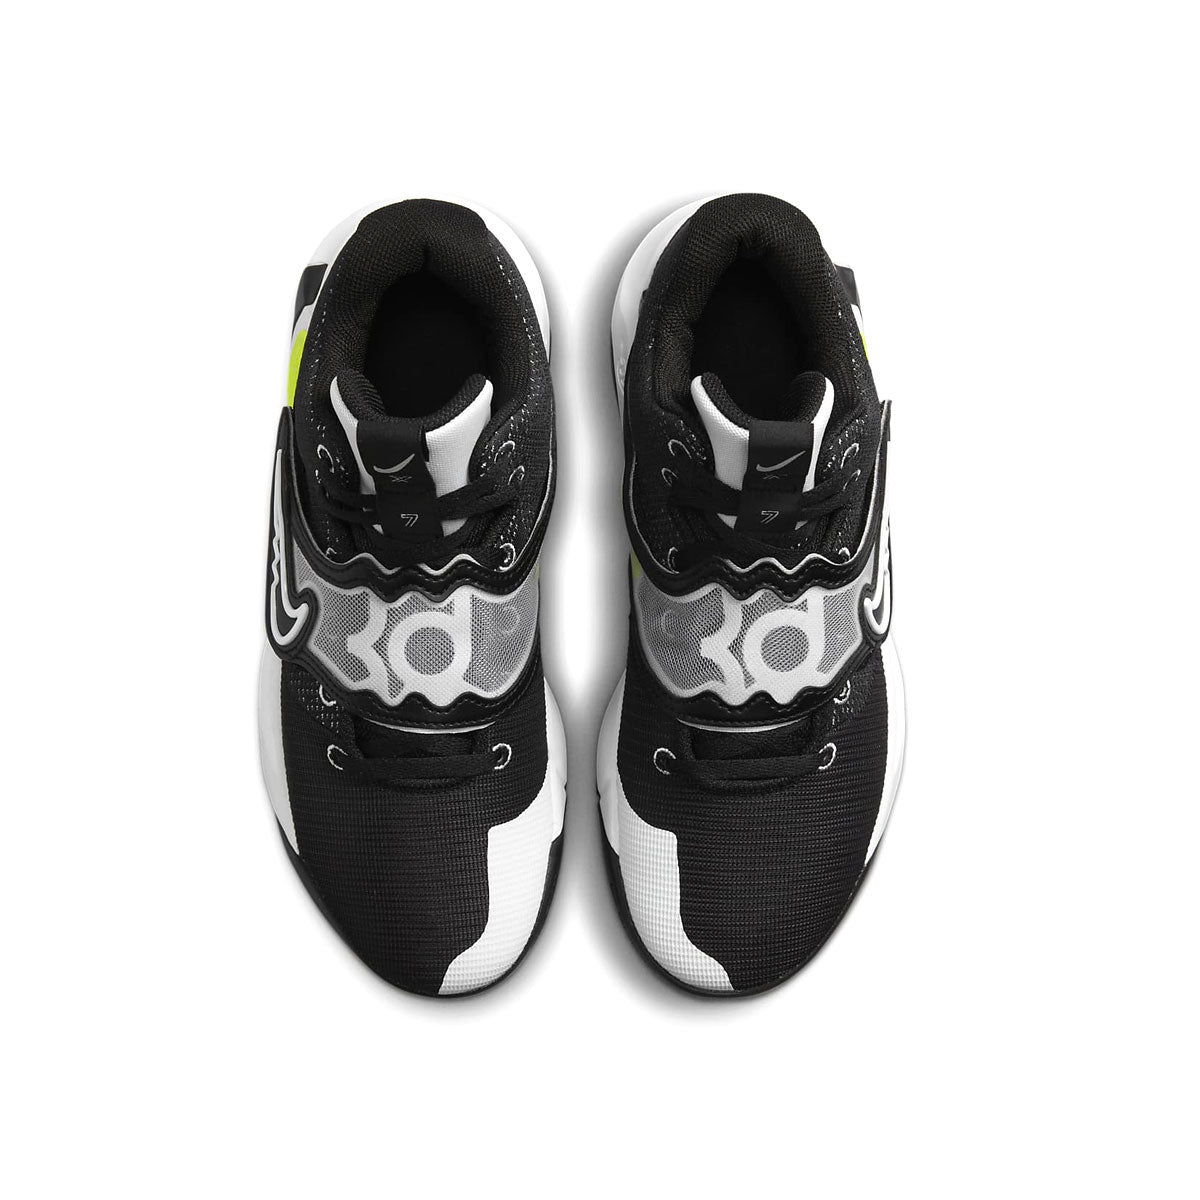 Nike Men's KD Trey 5 X Black Volt White